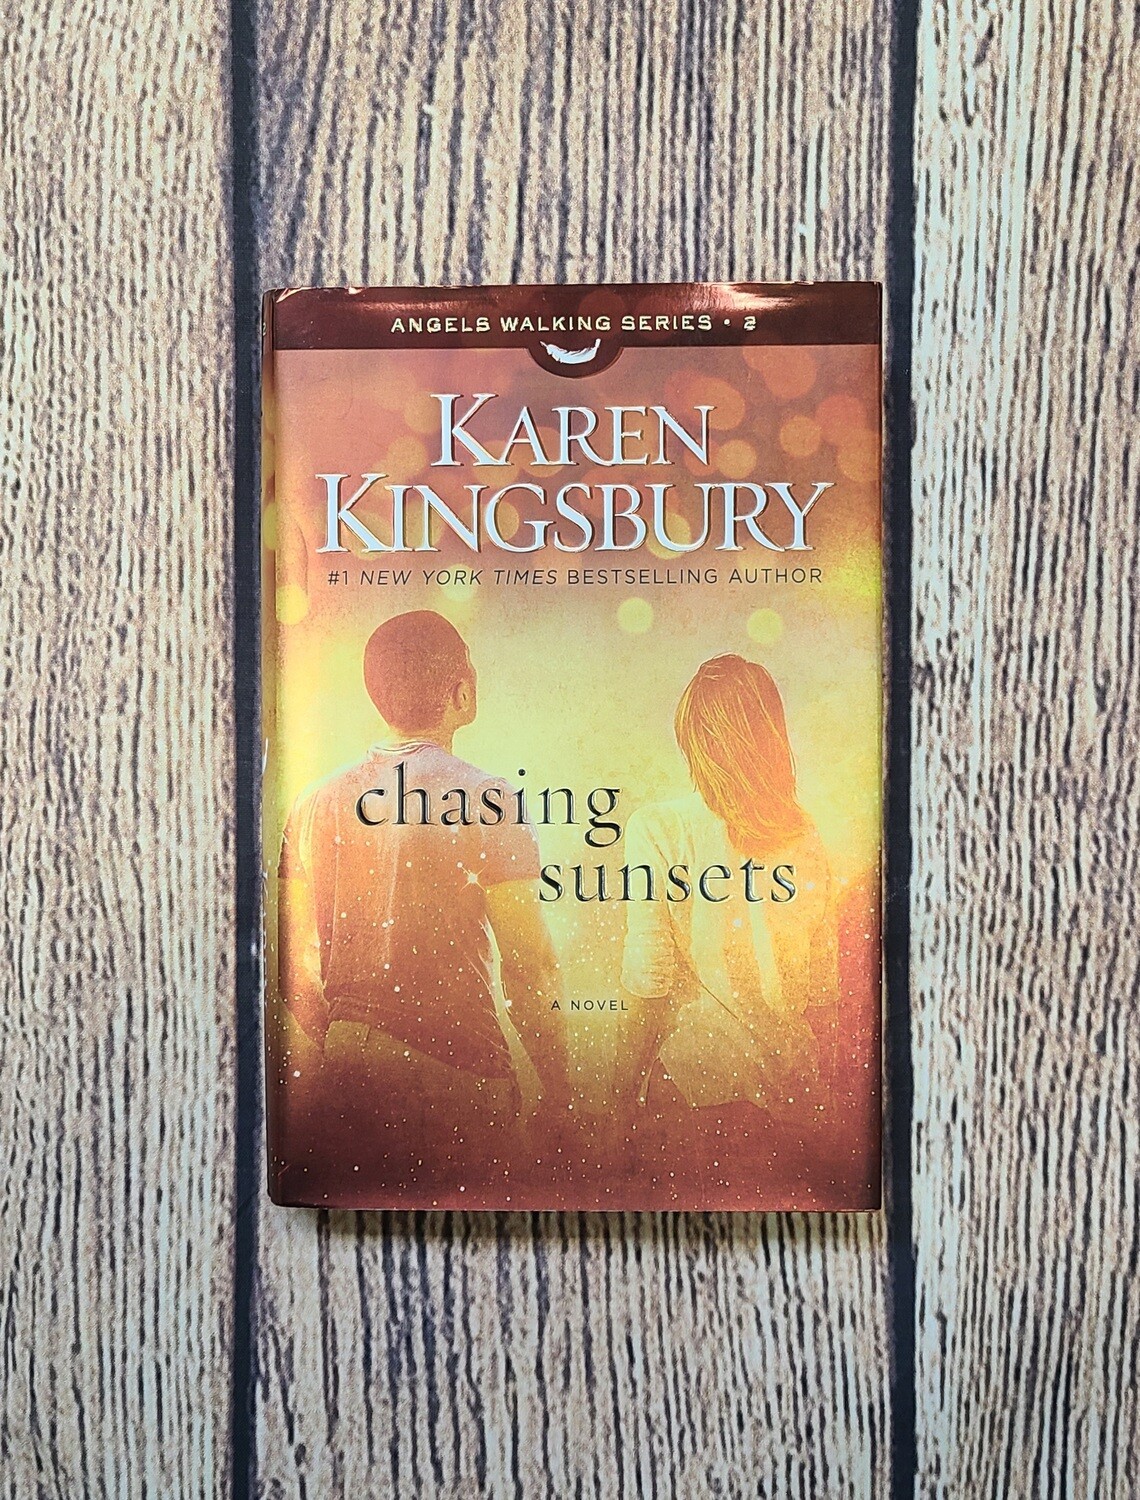 Chasing Sunsets by Karen Kingsbury